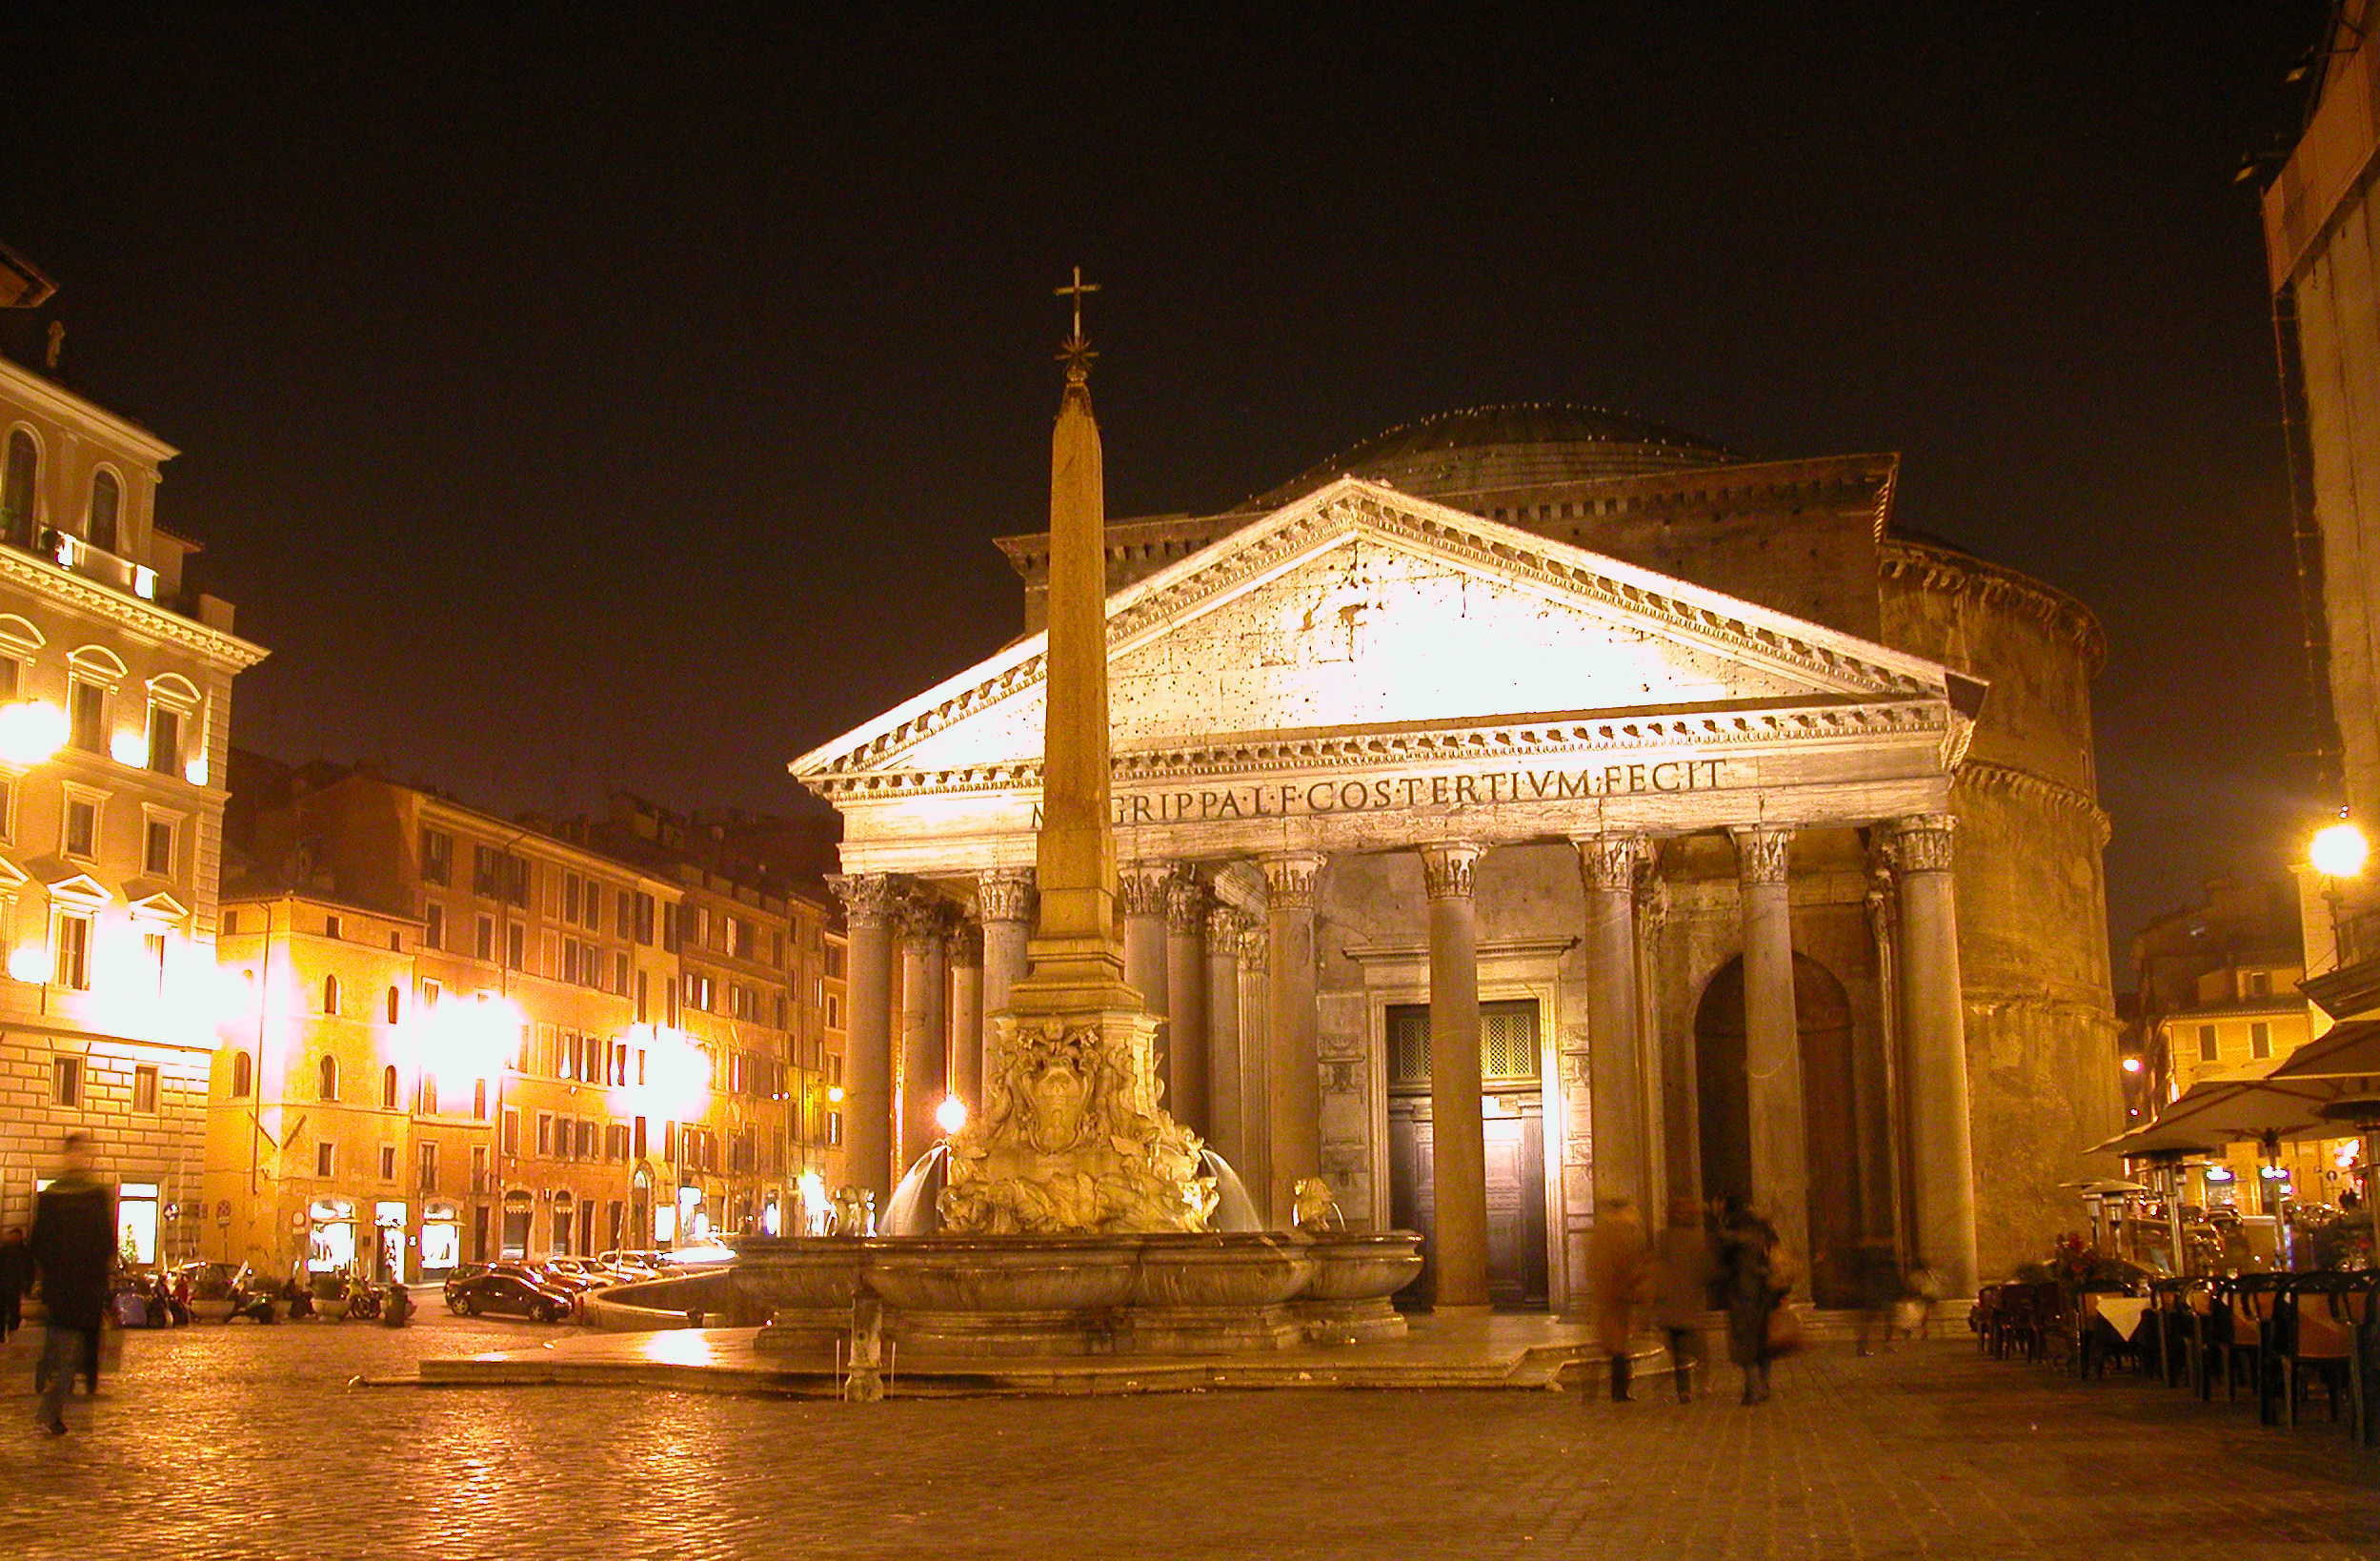 The floodlit Pantheon